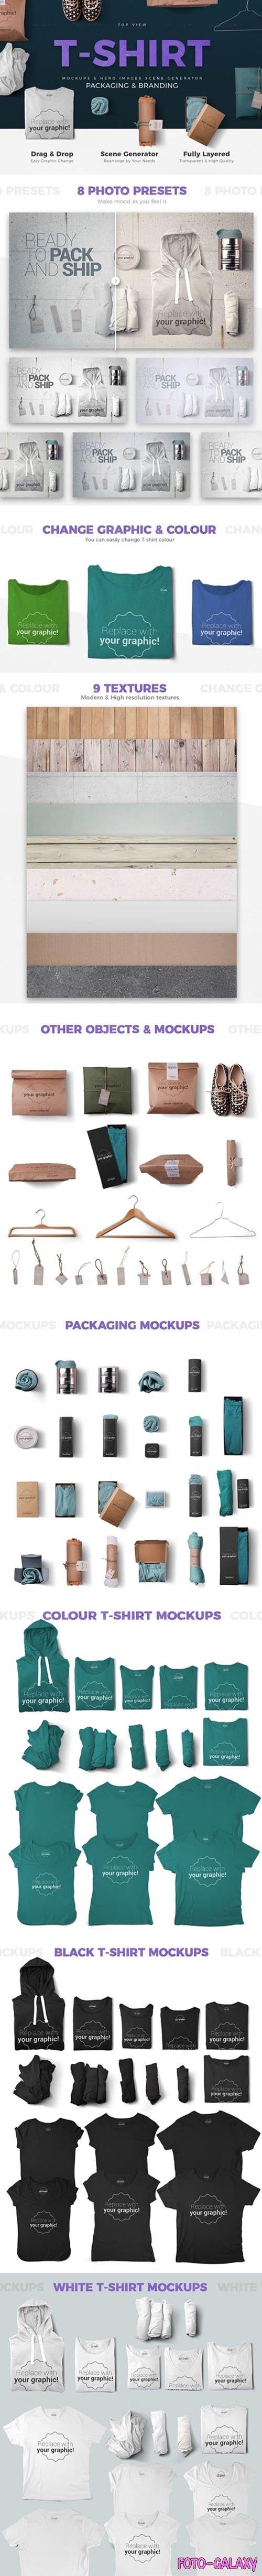 T-shirt PSD Mockups - Packaging & Branding